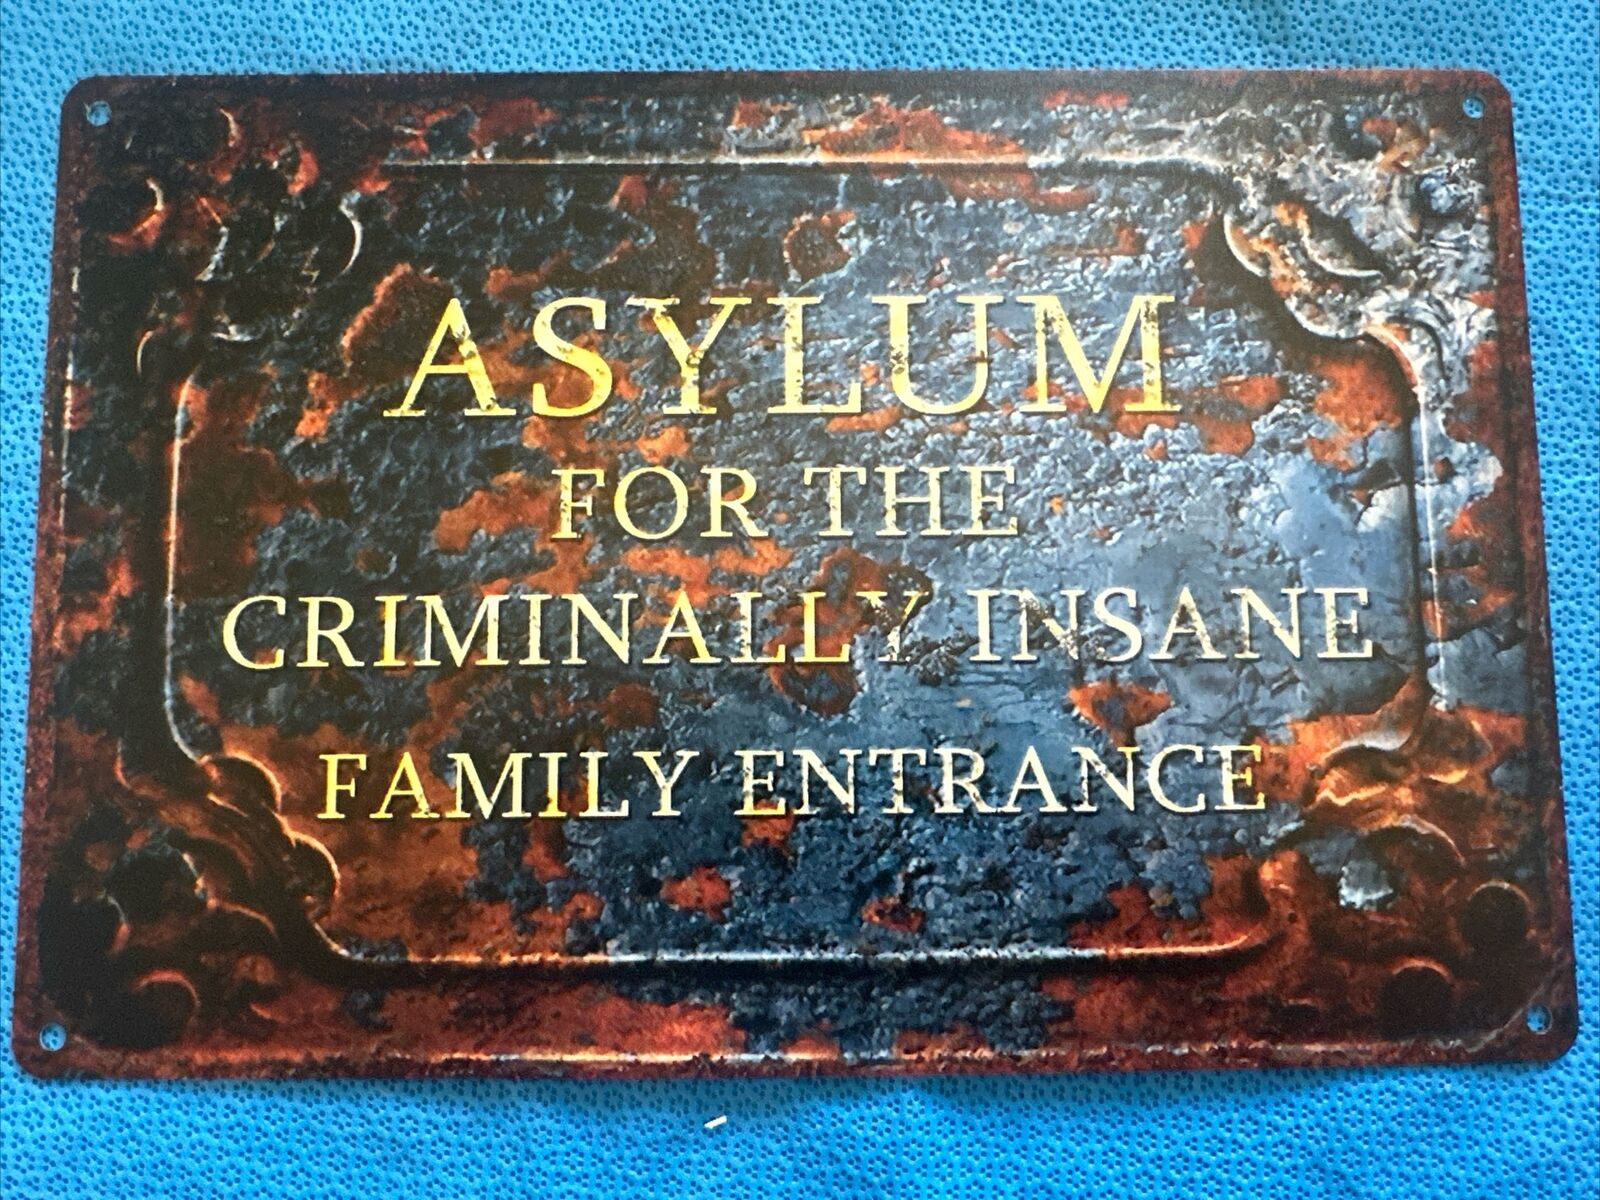 Vintage Asylum For The Criminally Insane Family Entrance metal sign, Crazy Cool